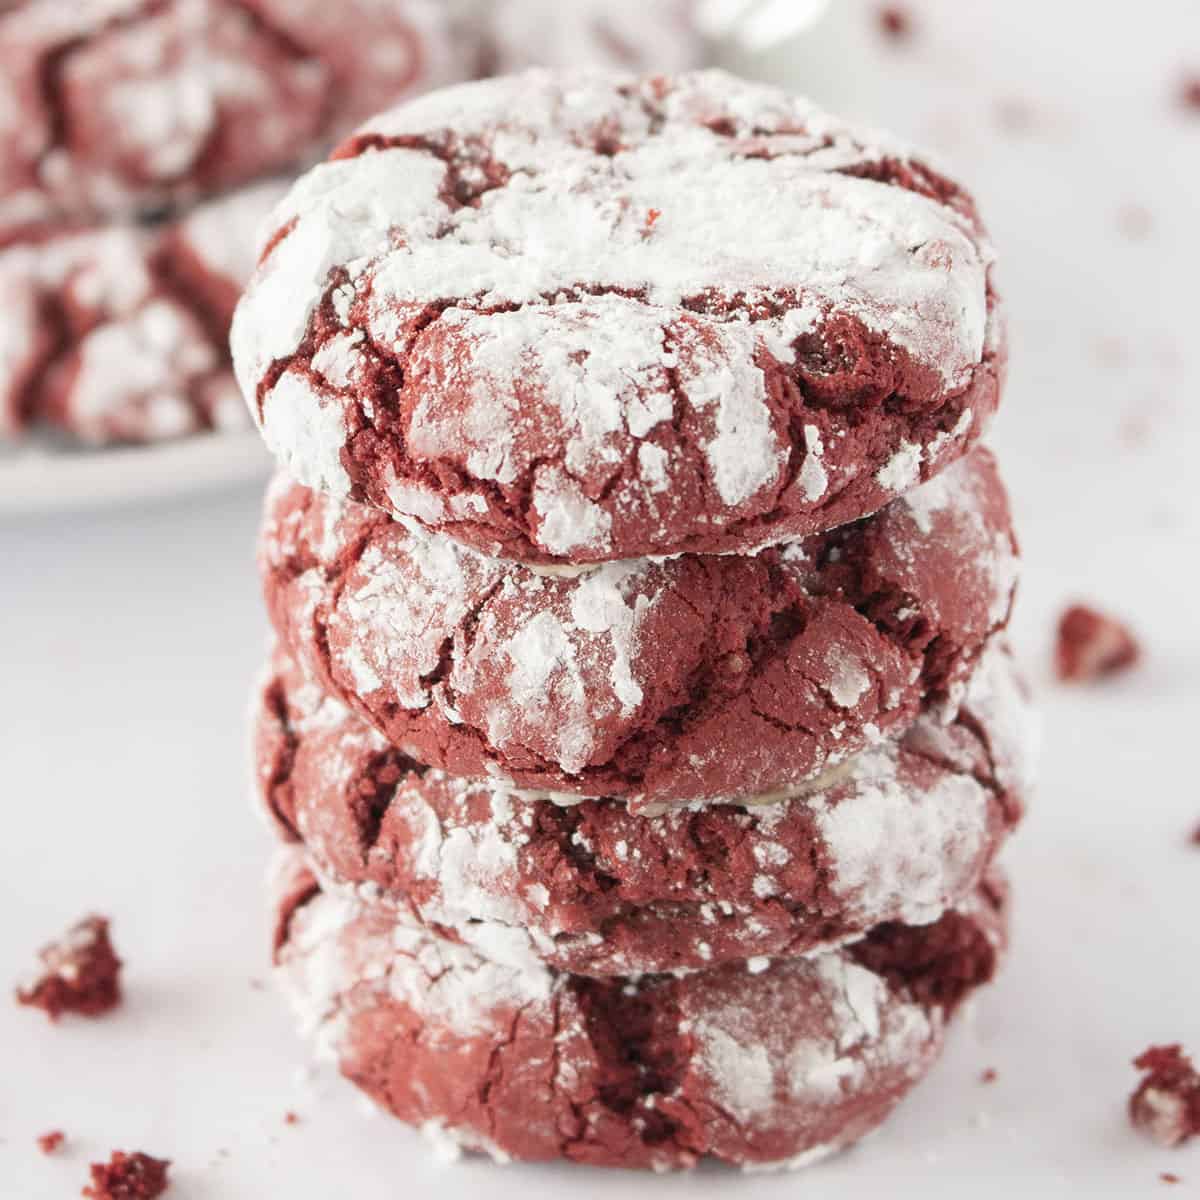 Stack of Red Velvet Crinkle Cookies with crumbs.